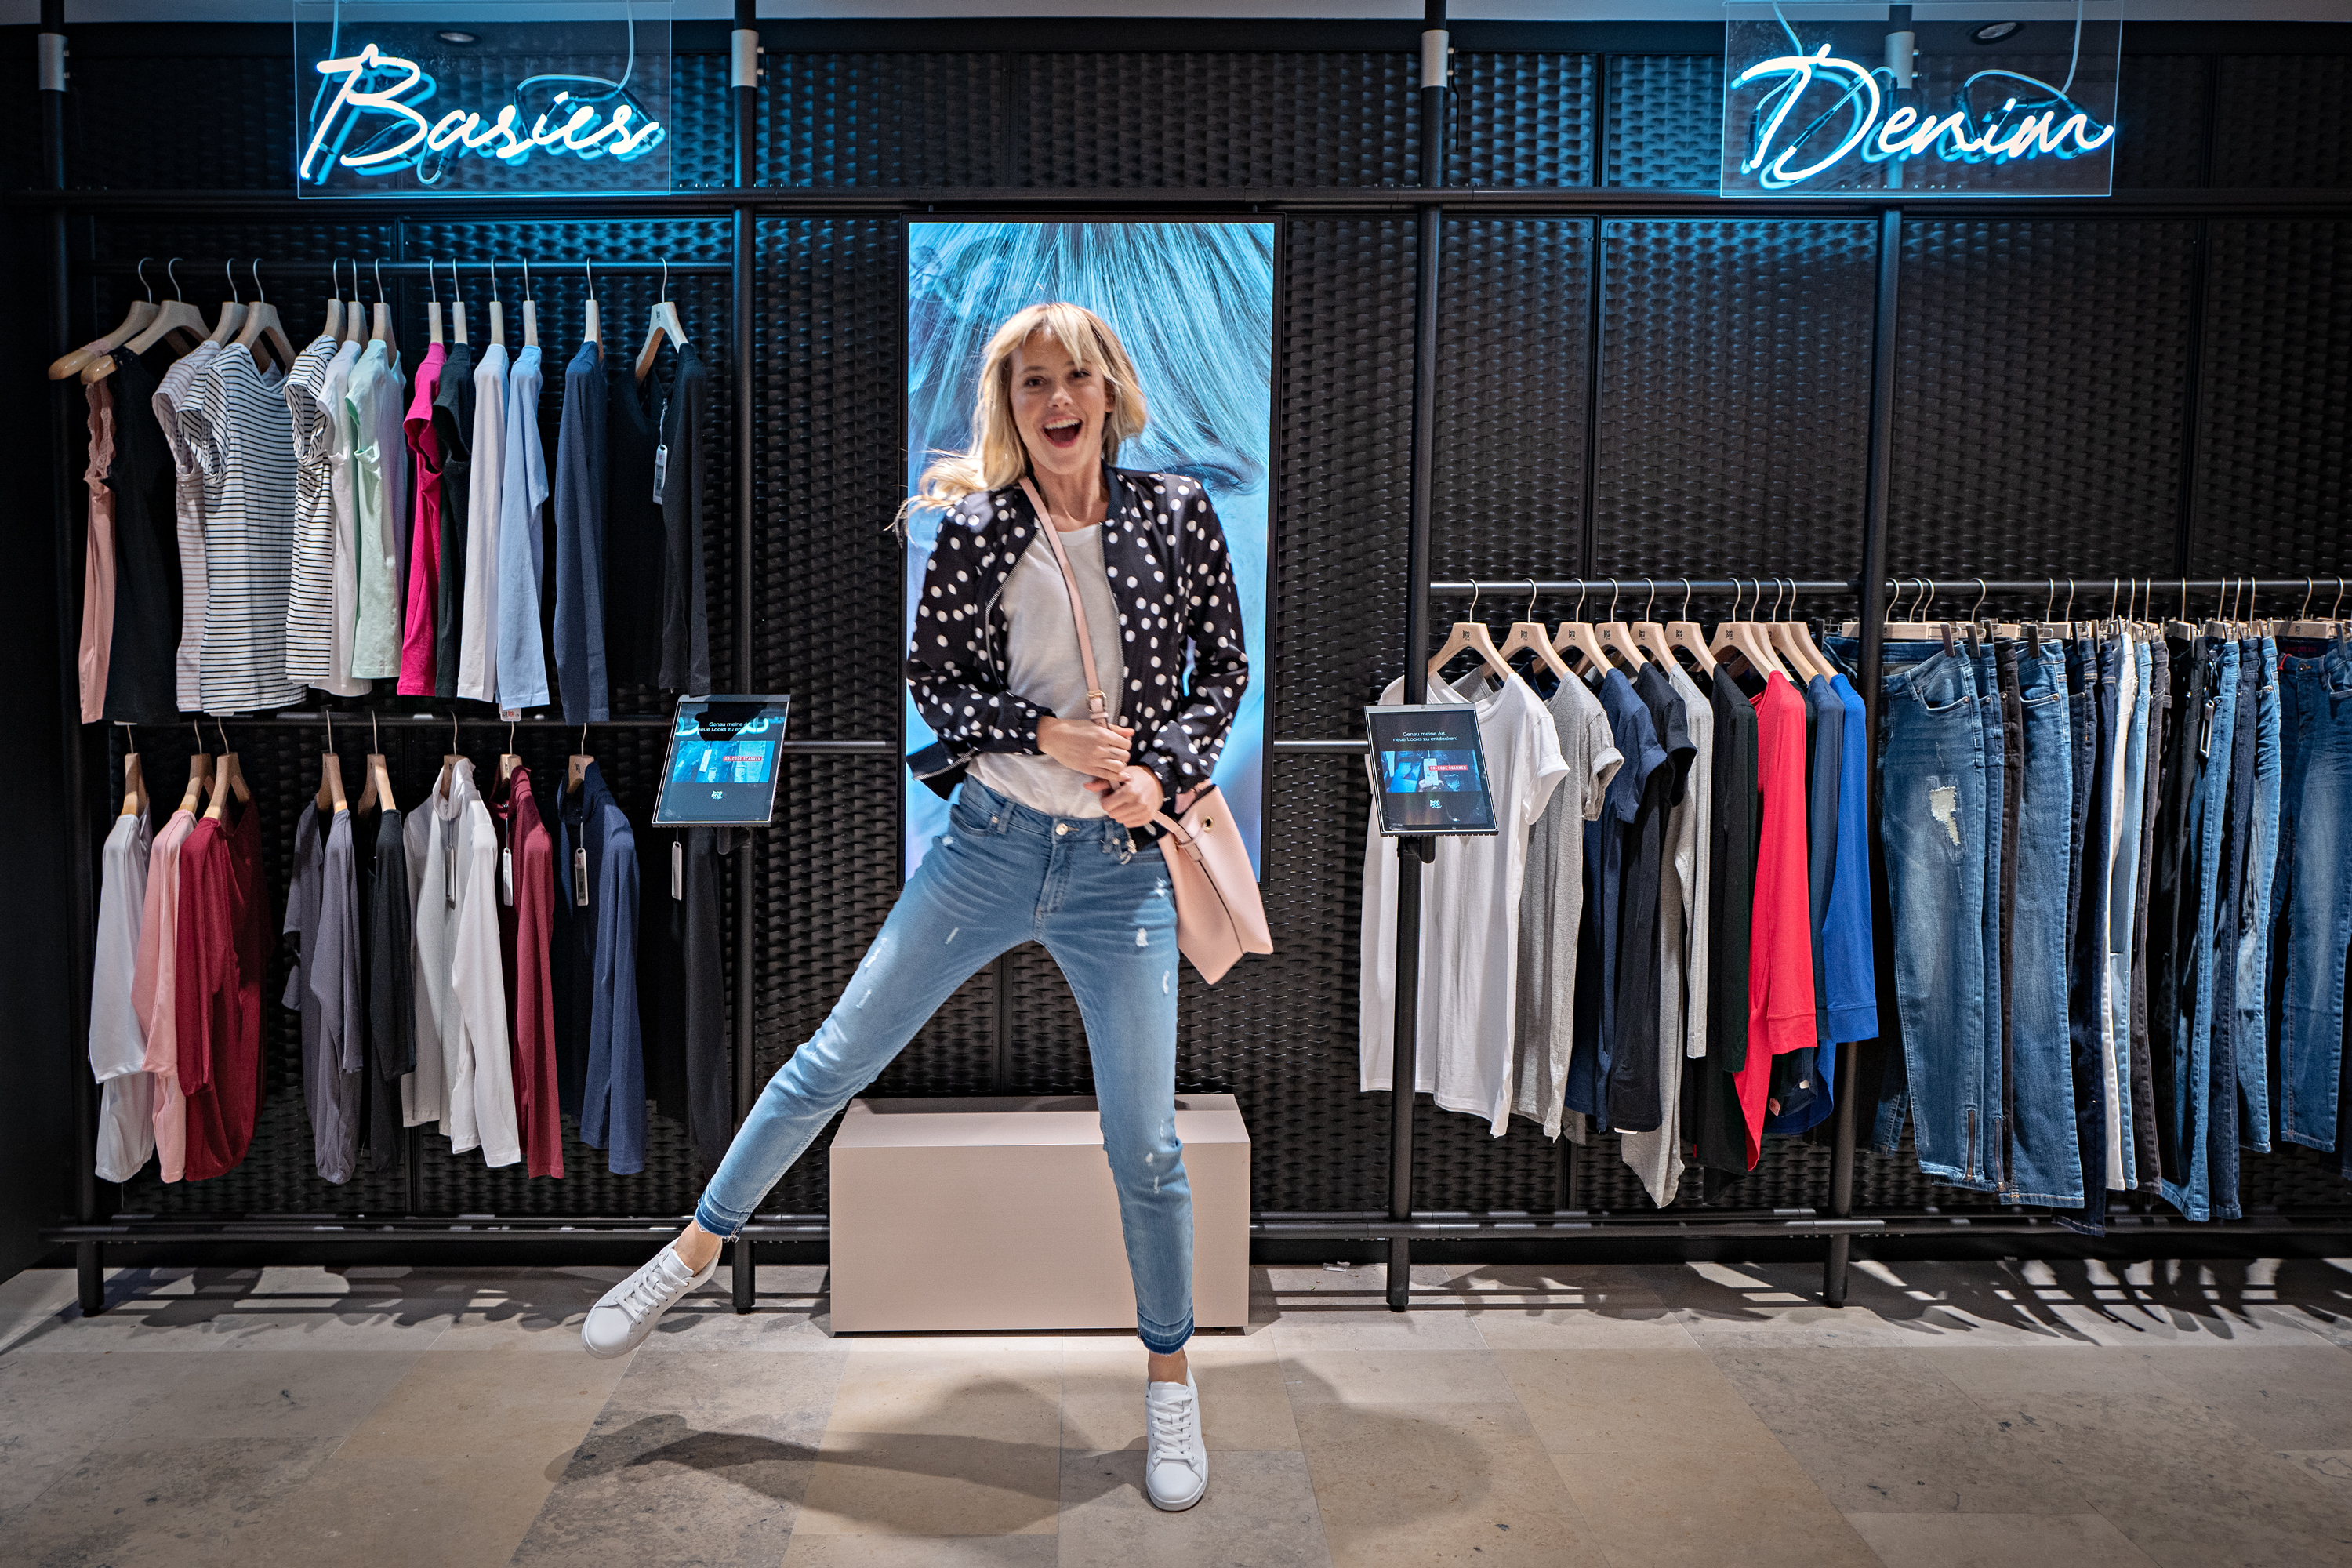 bonprix's “fashion connect” Store Concept in Hamburg Has Won